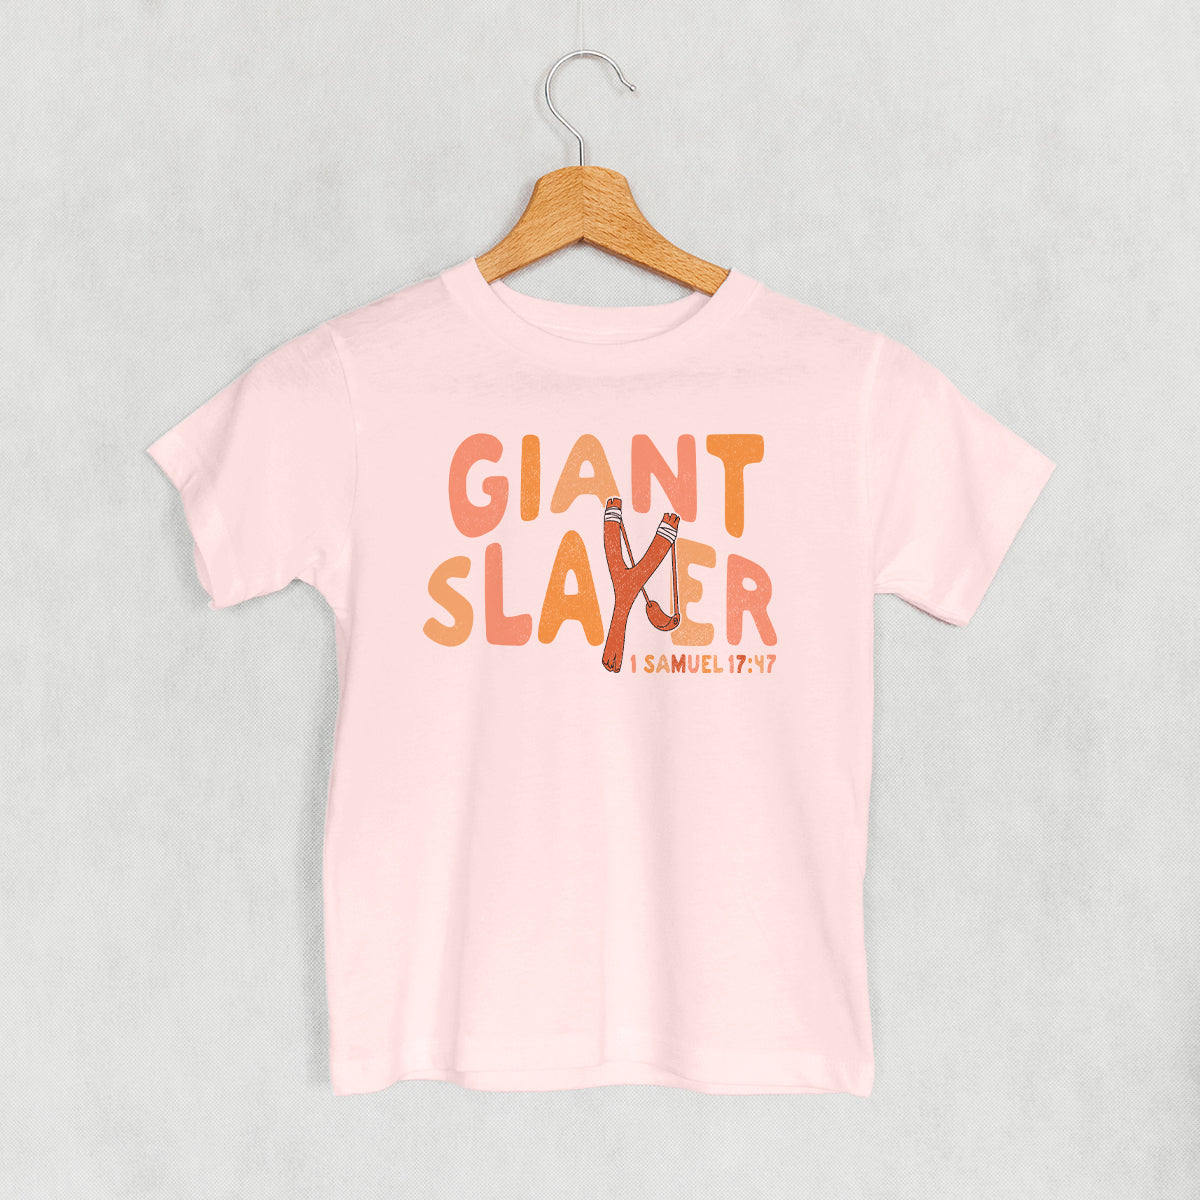 Giant Slayer (Kids)